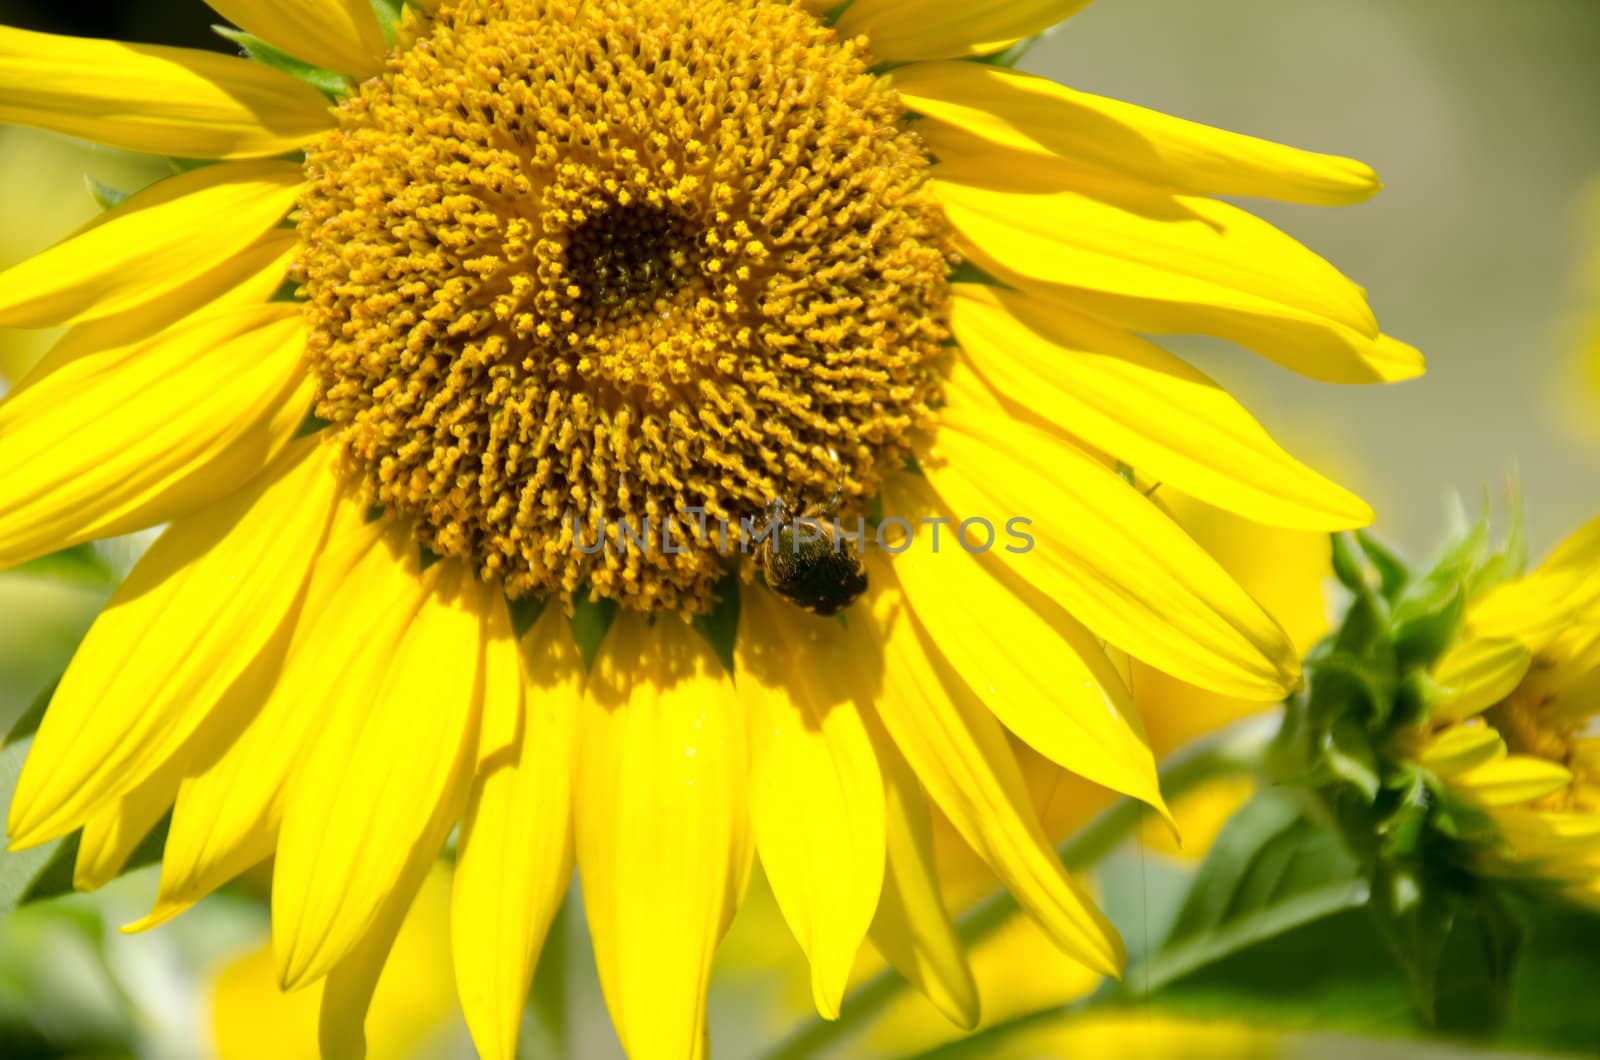 Sun flower with beetle by Arrxxx